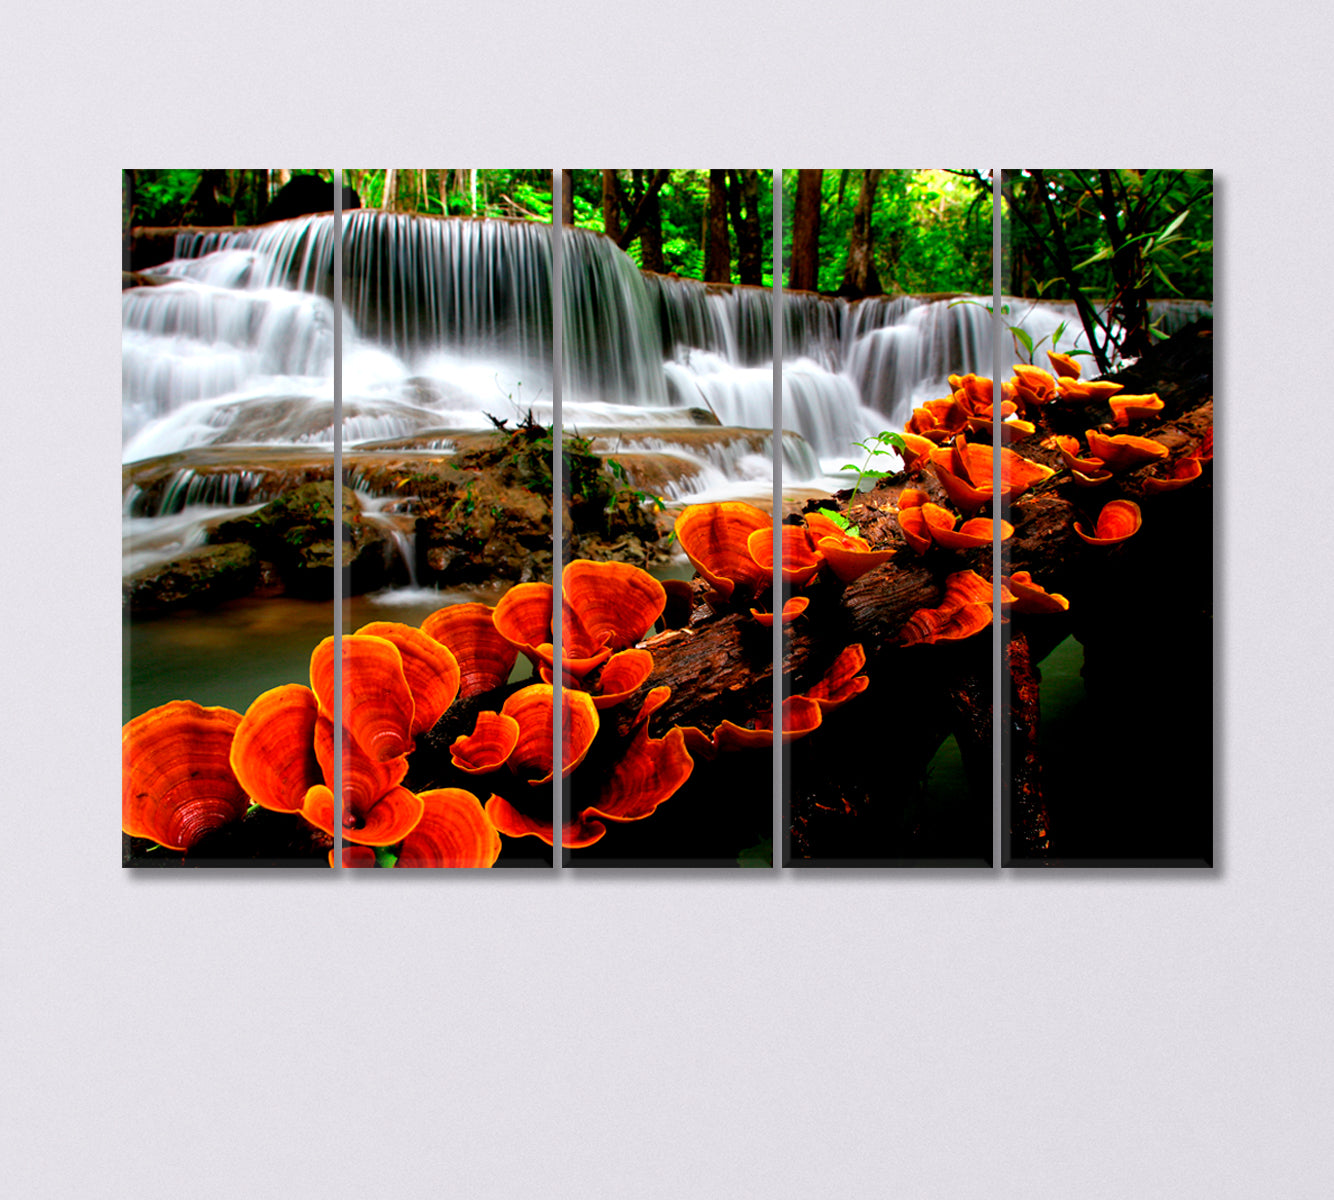 Unusual Orange Mushrooms by the Waterfall Canvas Print-Canvas Print-CetArt-5 Panels-36x24 inches-CetArt